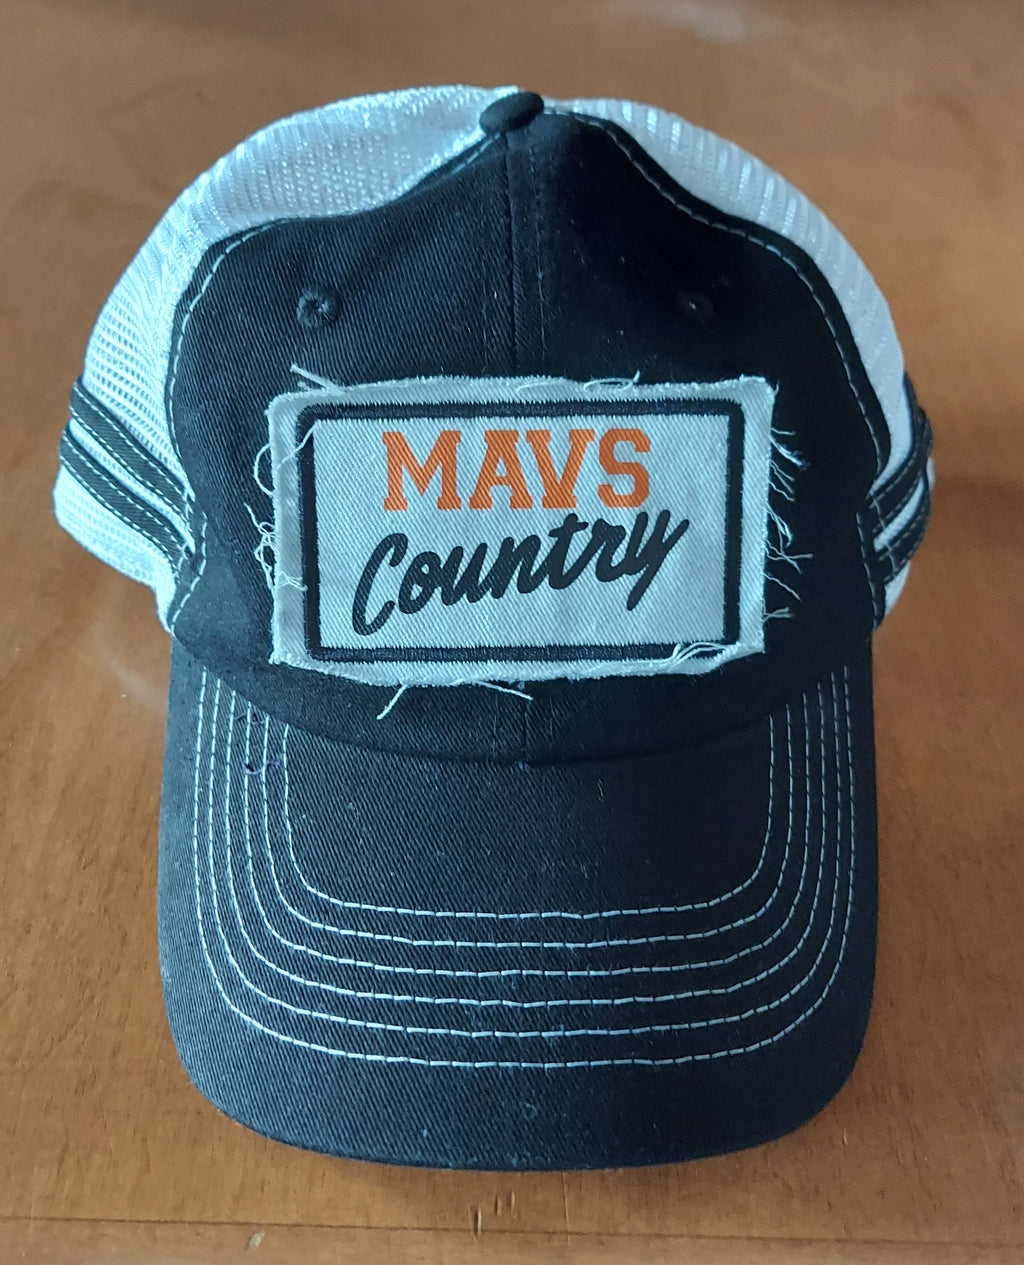 Mavs Country Hat